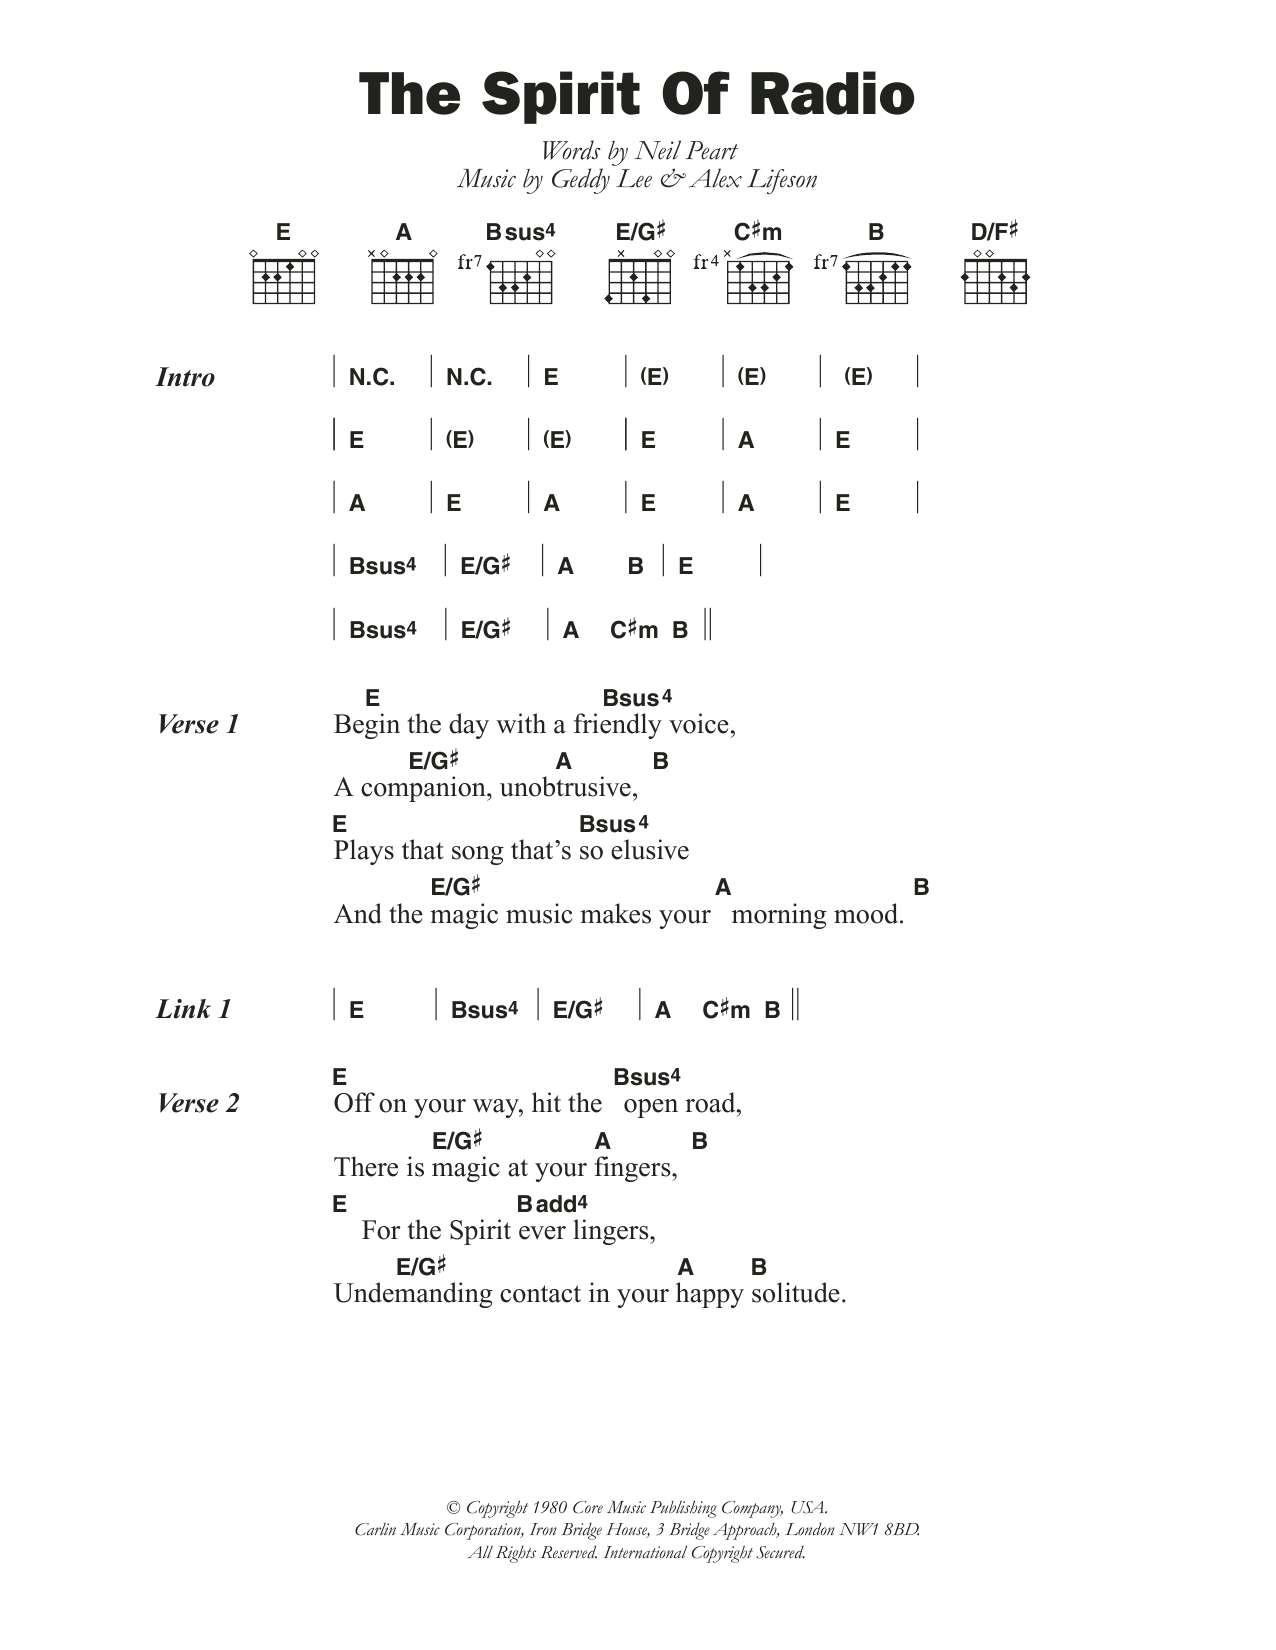 Rush The Spirit Of Radio Sheet Music Notes & Chords for Bass Guitar Tab - Download or Print PDF